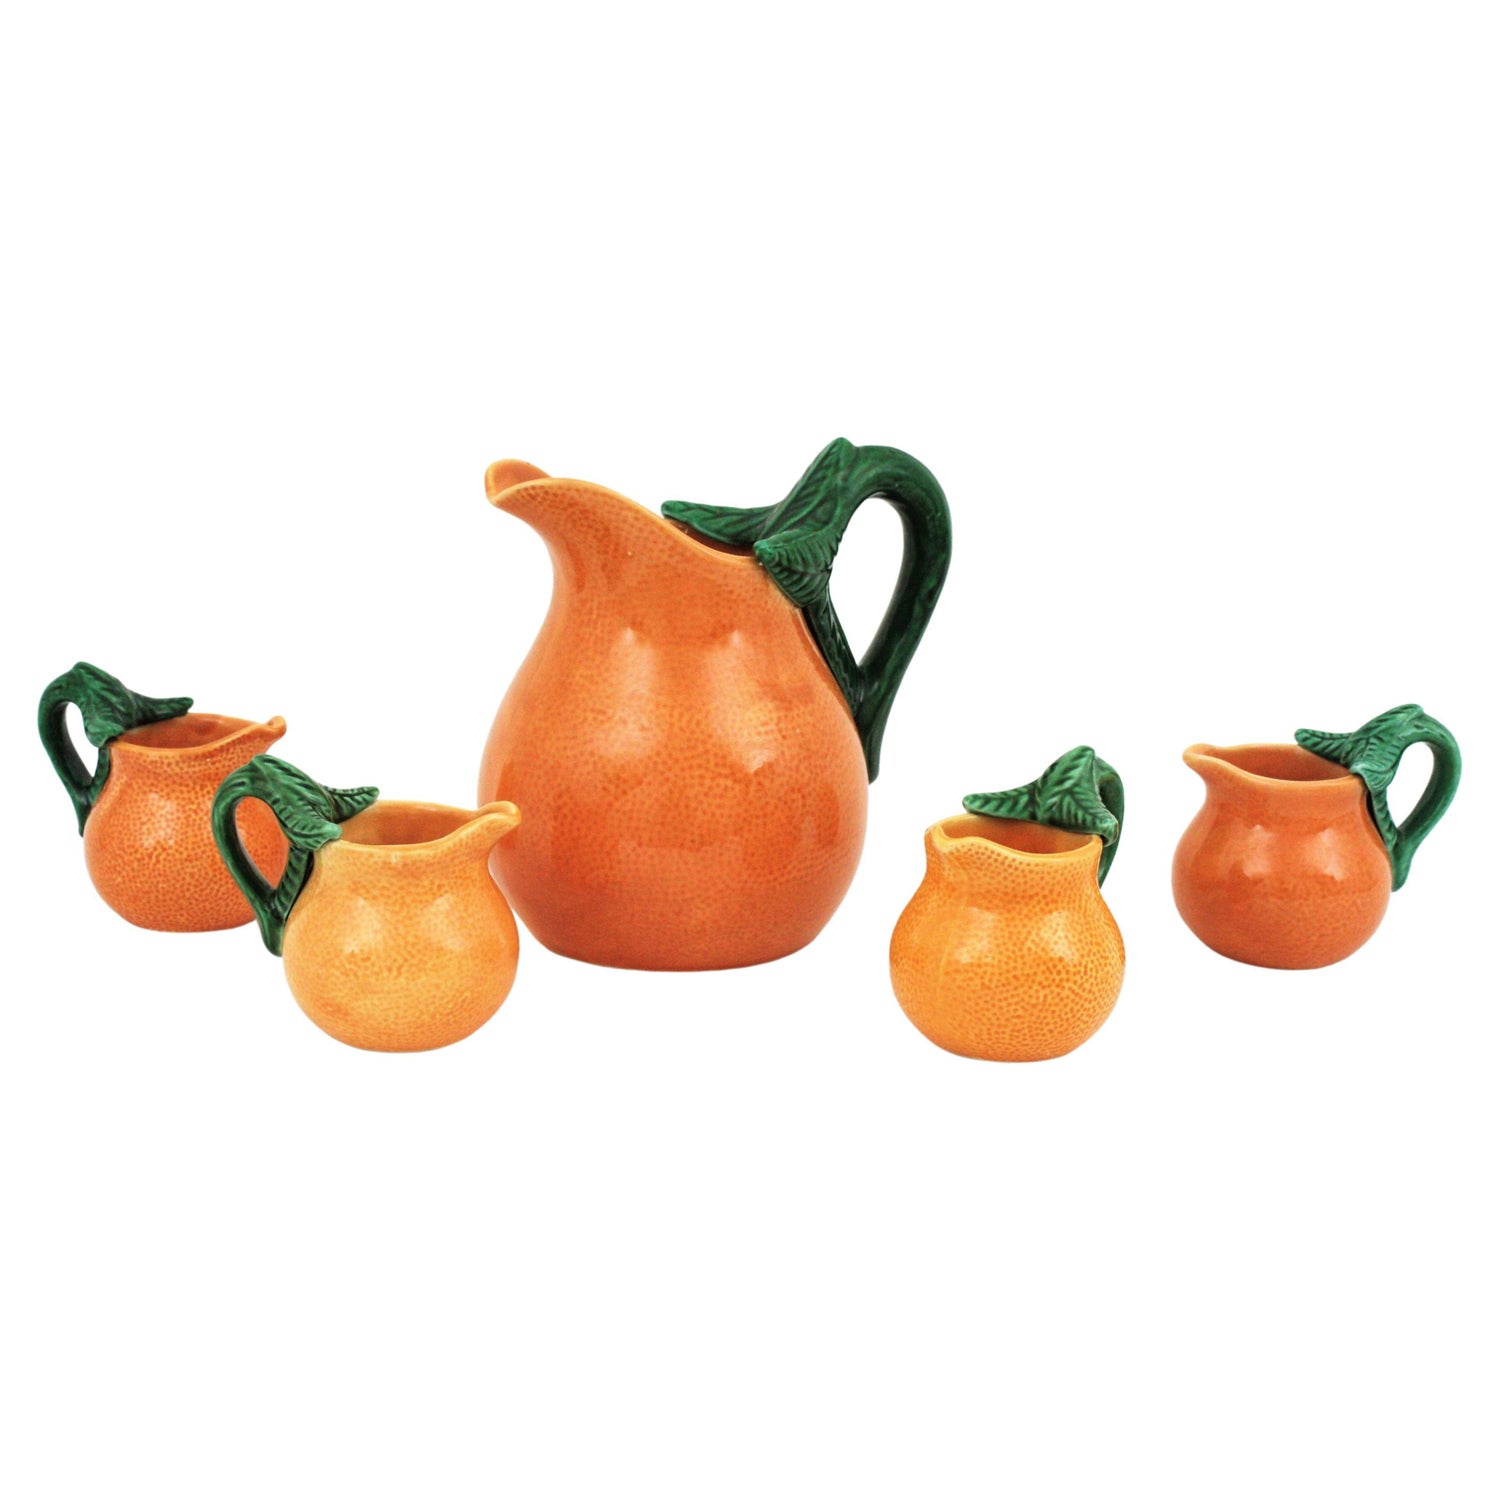 https://a.1stdibscdn.com/orange-glazed-ceramic-majolica-coffee-or-tea-set-for-four-for-sale/f_10962/f_332088621682010914700/f_33208862_1682010915919_bg_processed.jpg?width=1500